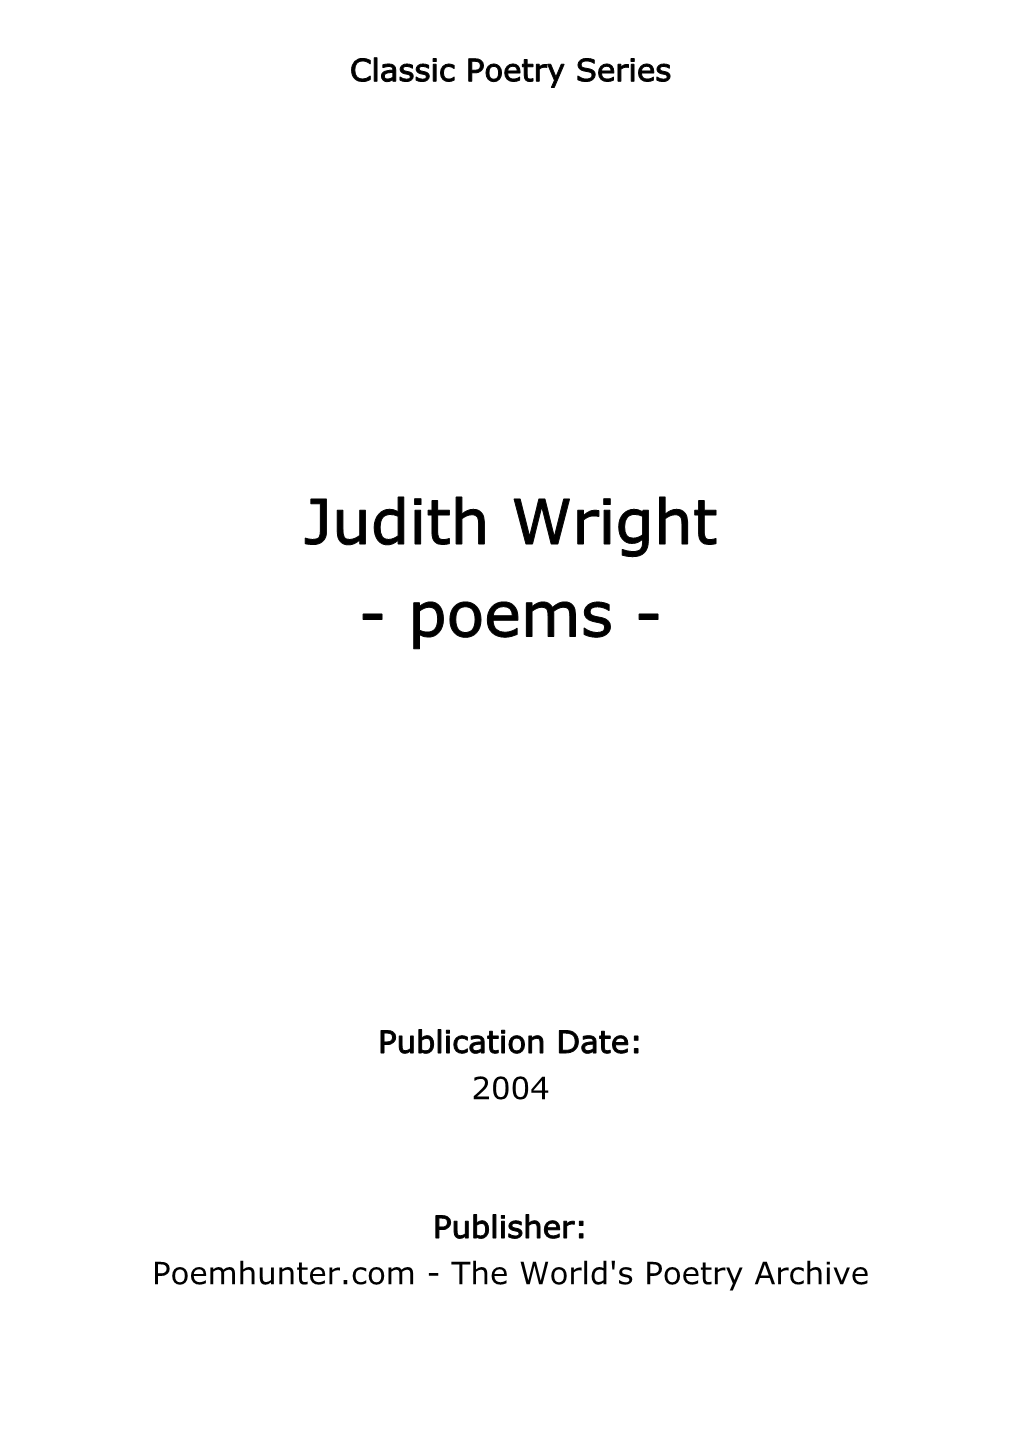 Judith Wright - Poems